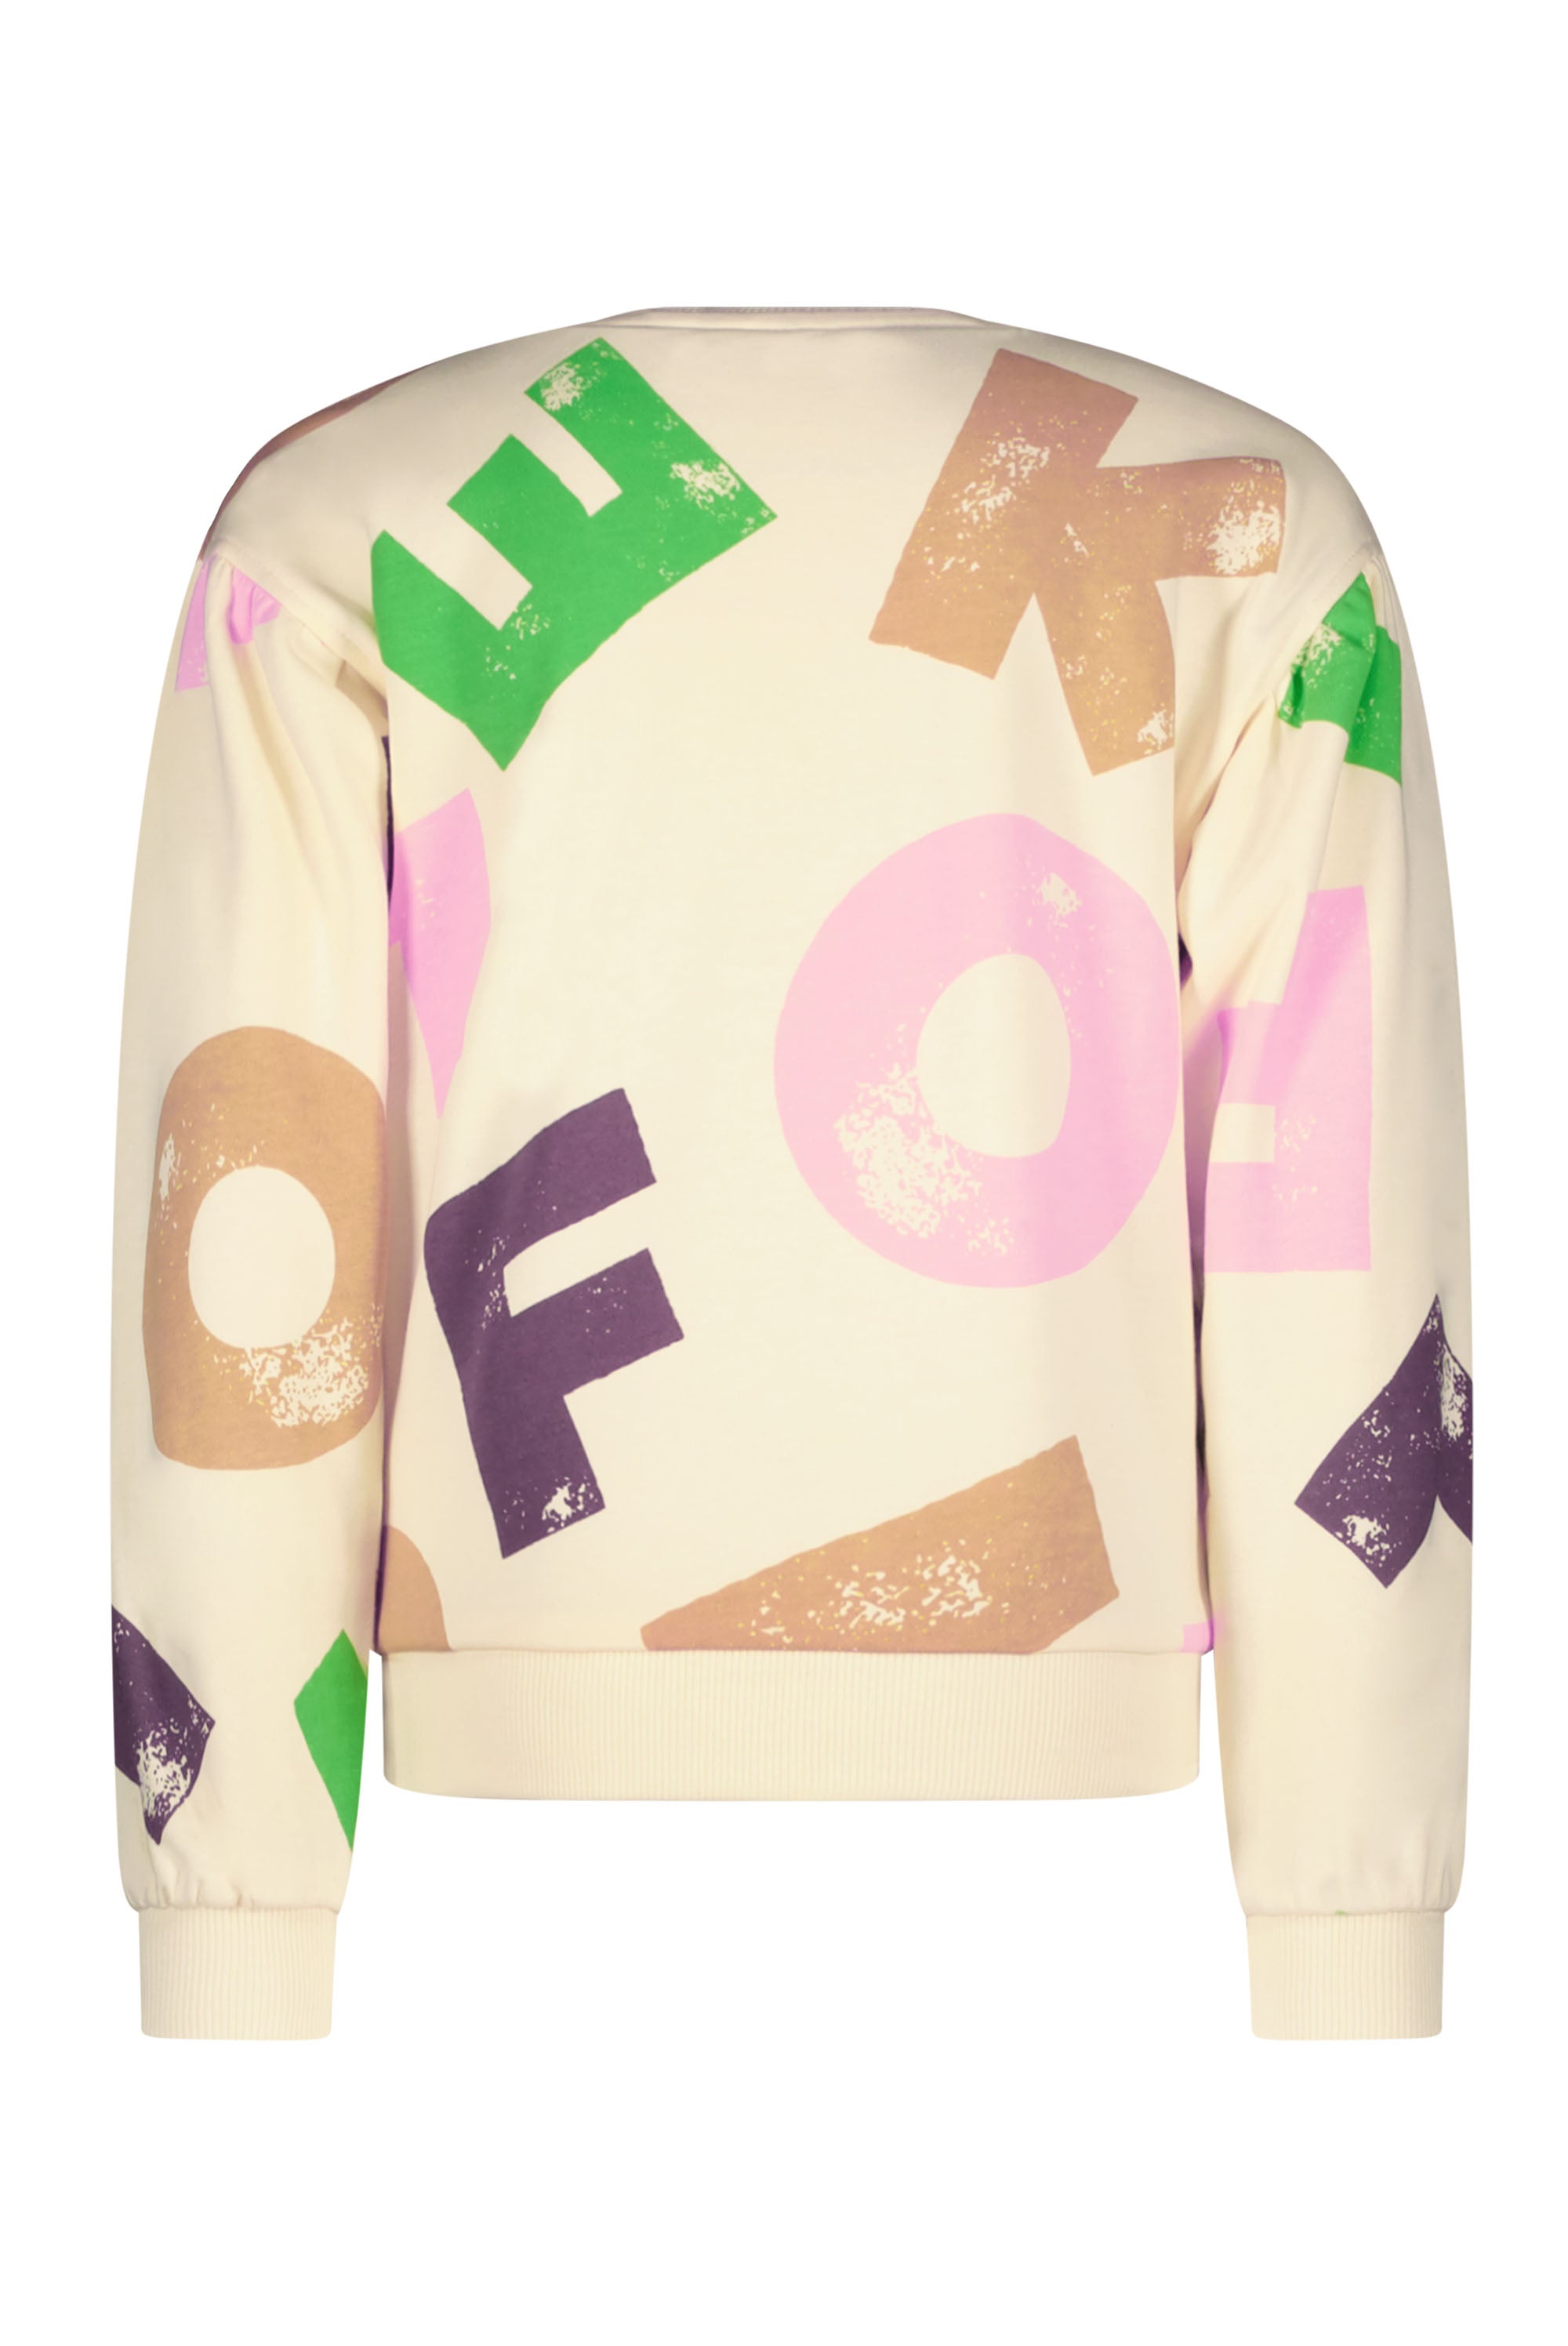 Like Flo Flo girls sweater graphic letter